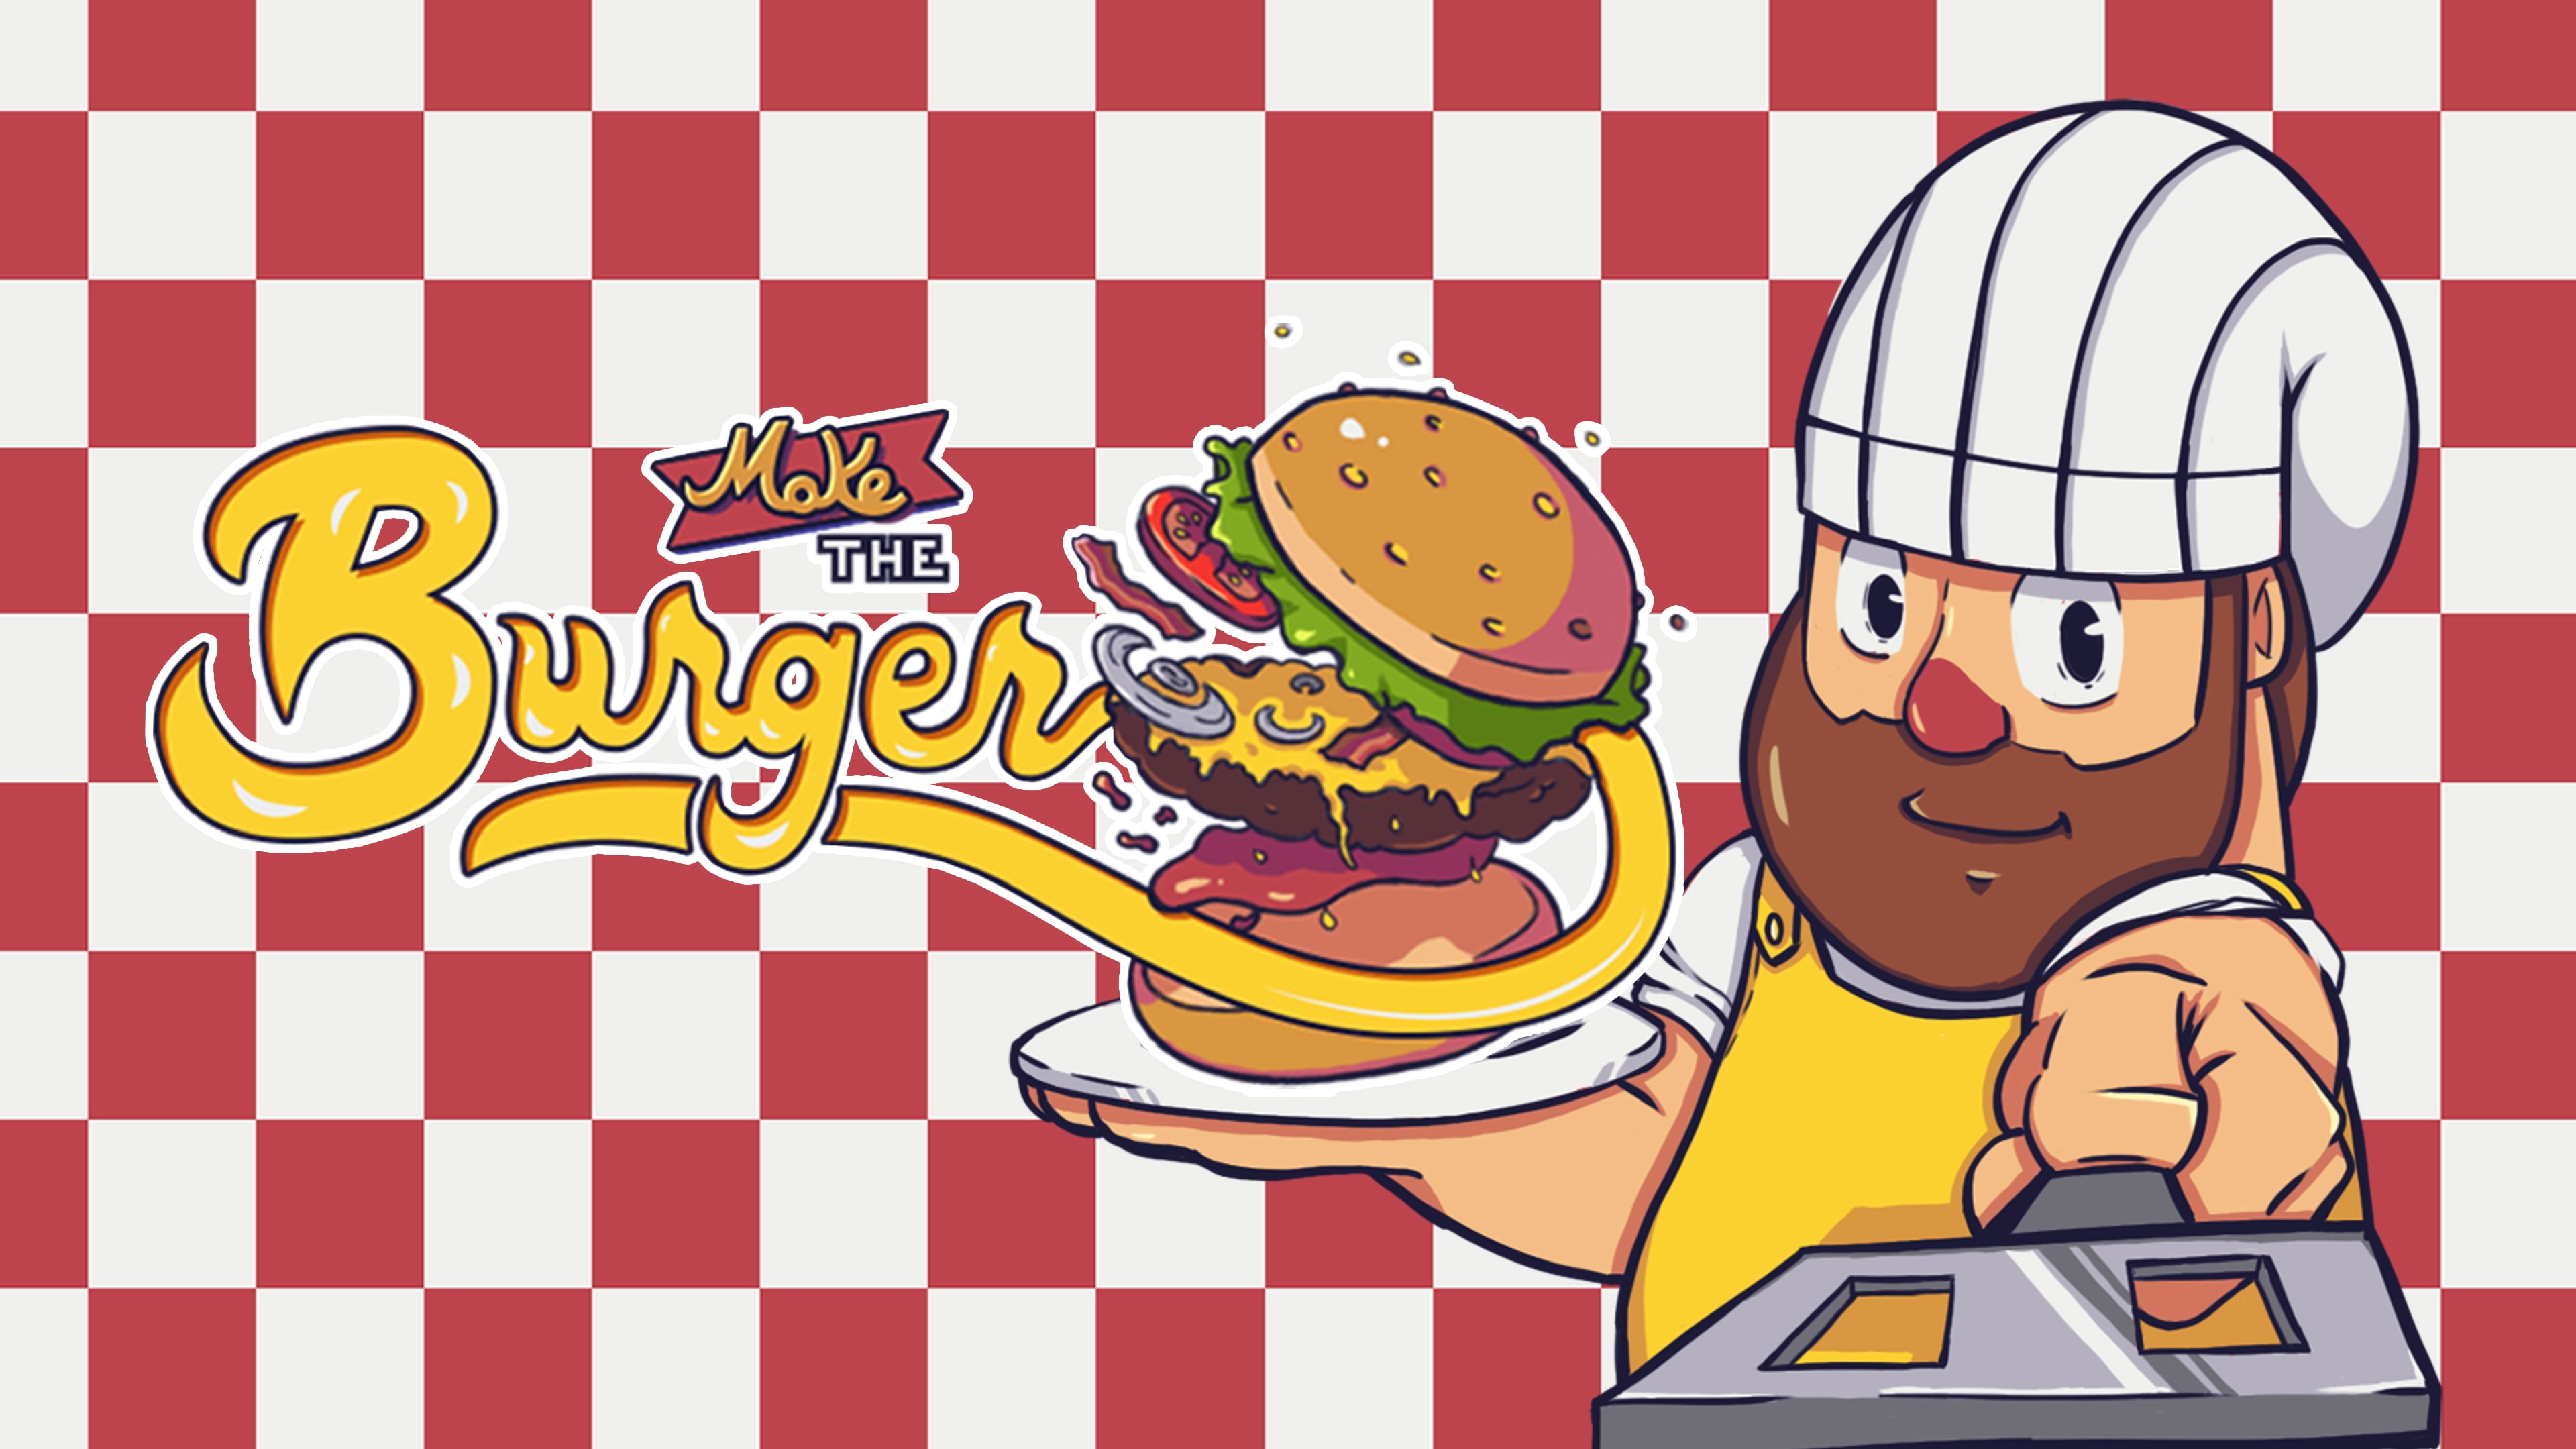 Make the Burger (English)